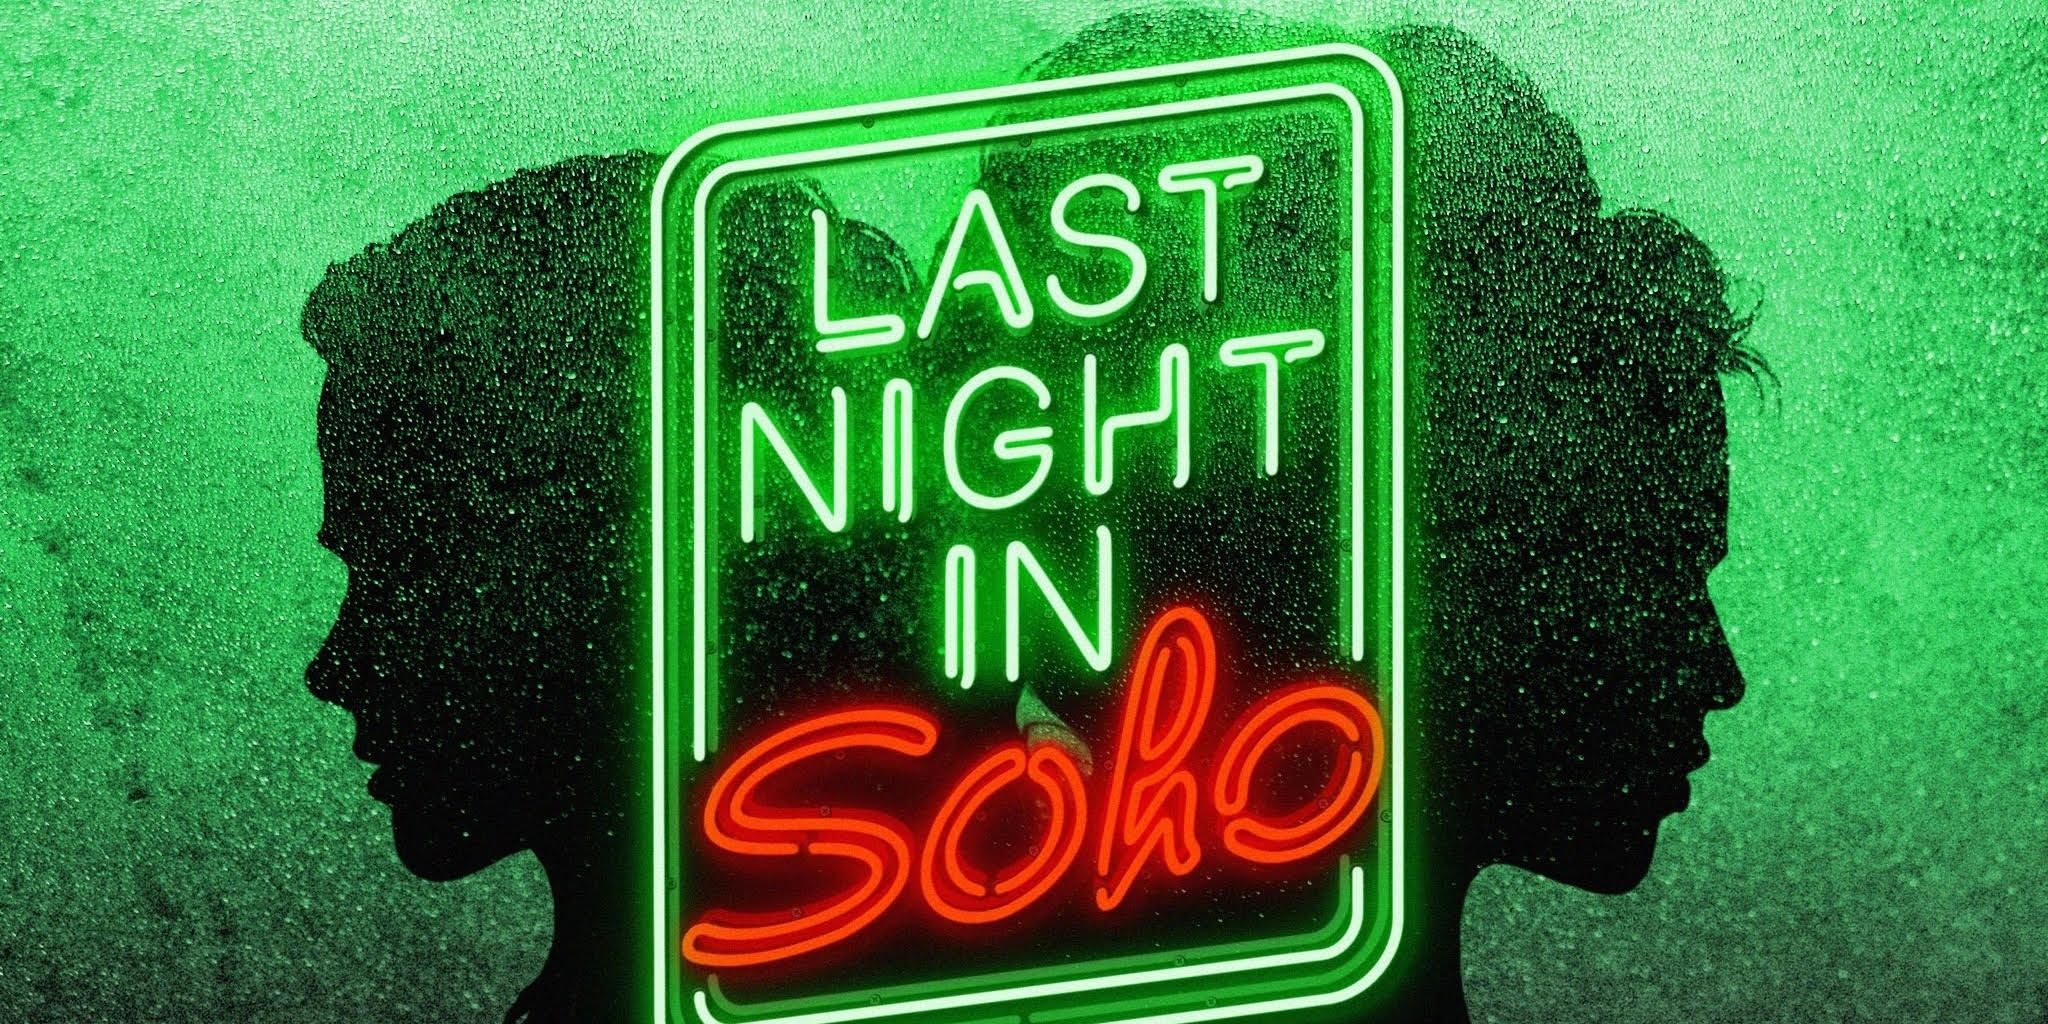 Green Last Night in Soho poster